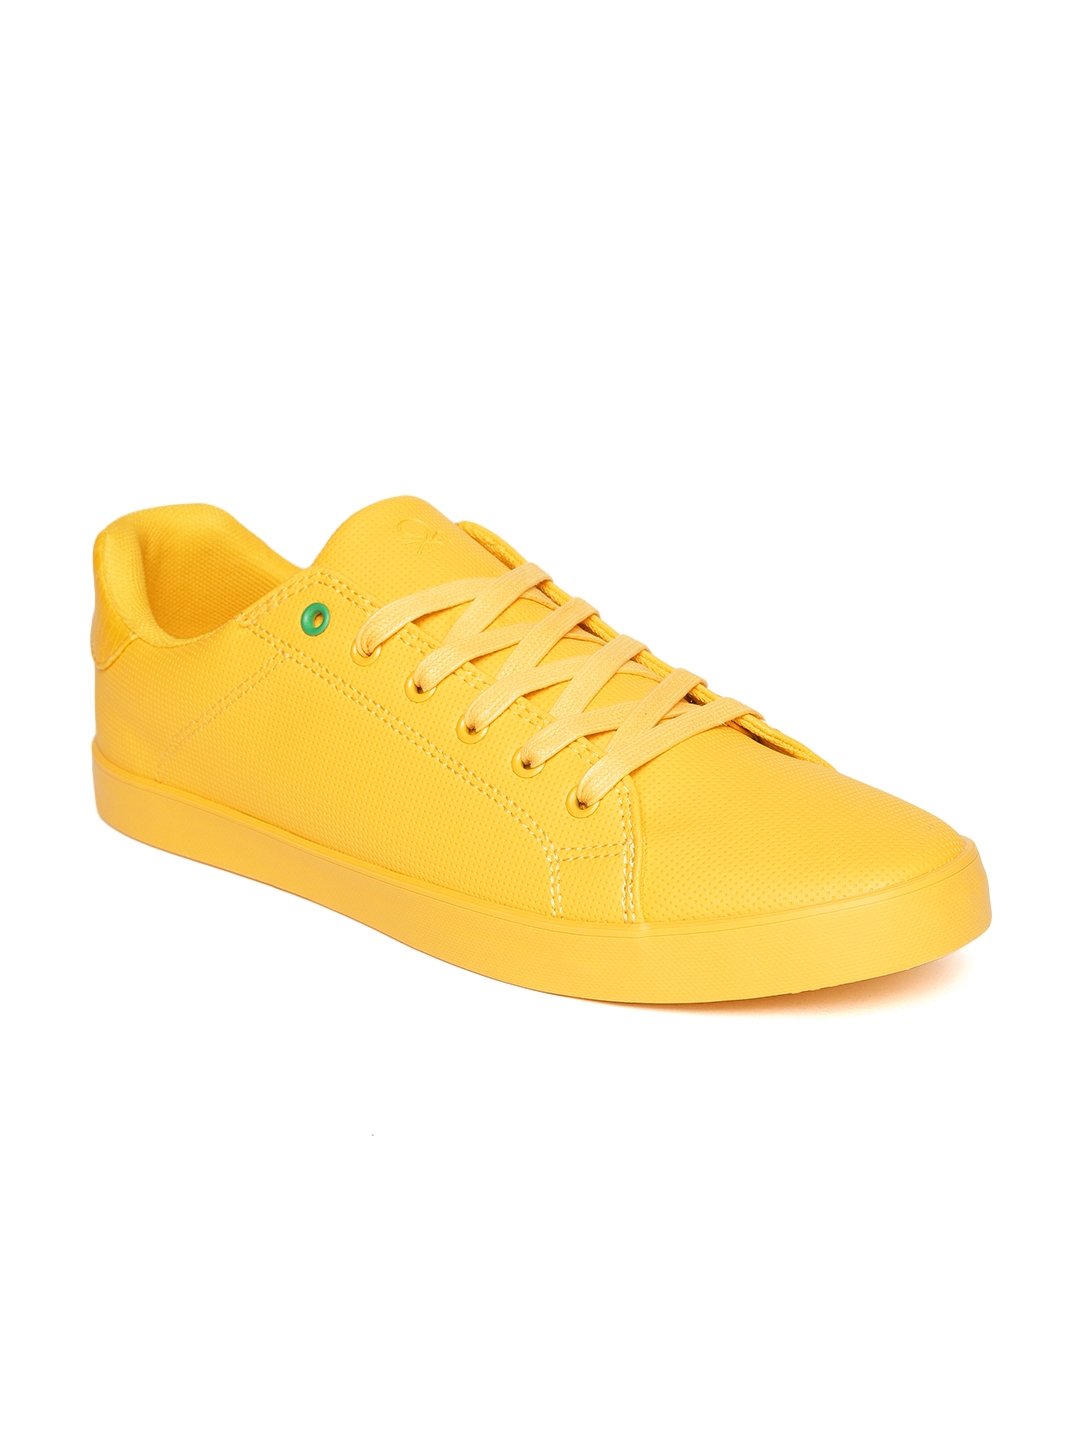 mustard yellow shoes men